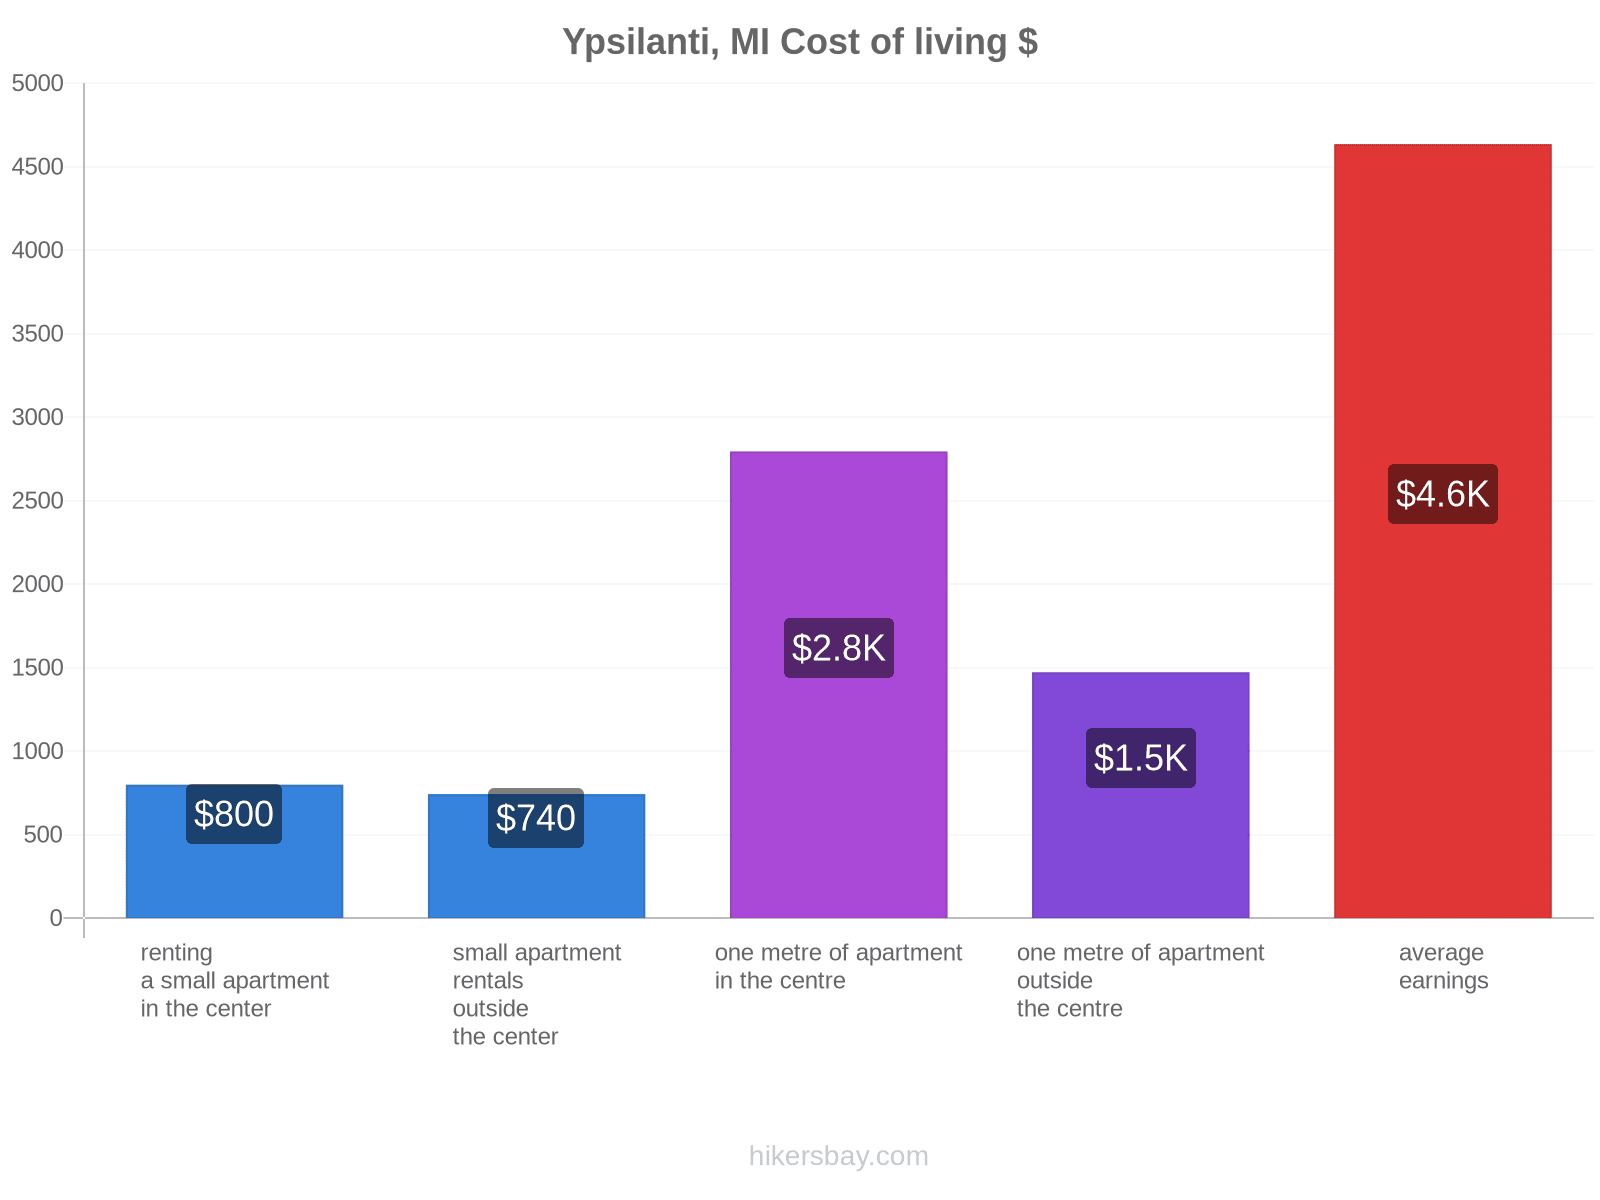 Ypsilanti, MI cost of living hikersbay.com